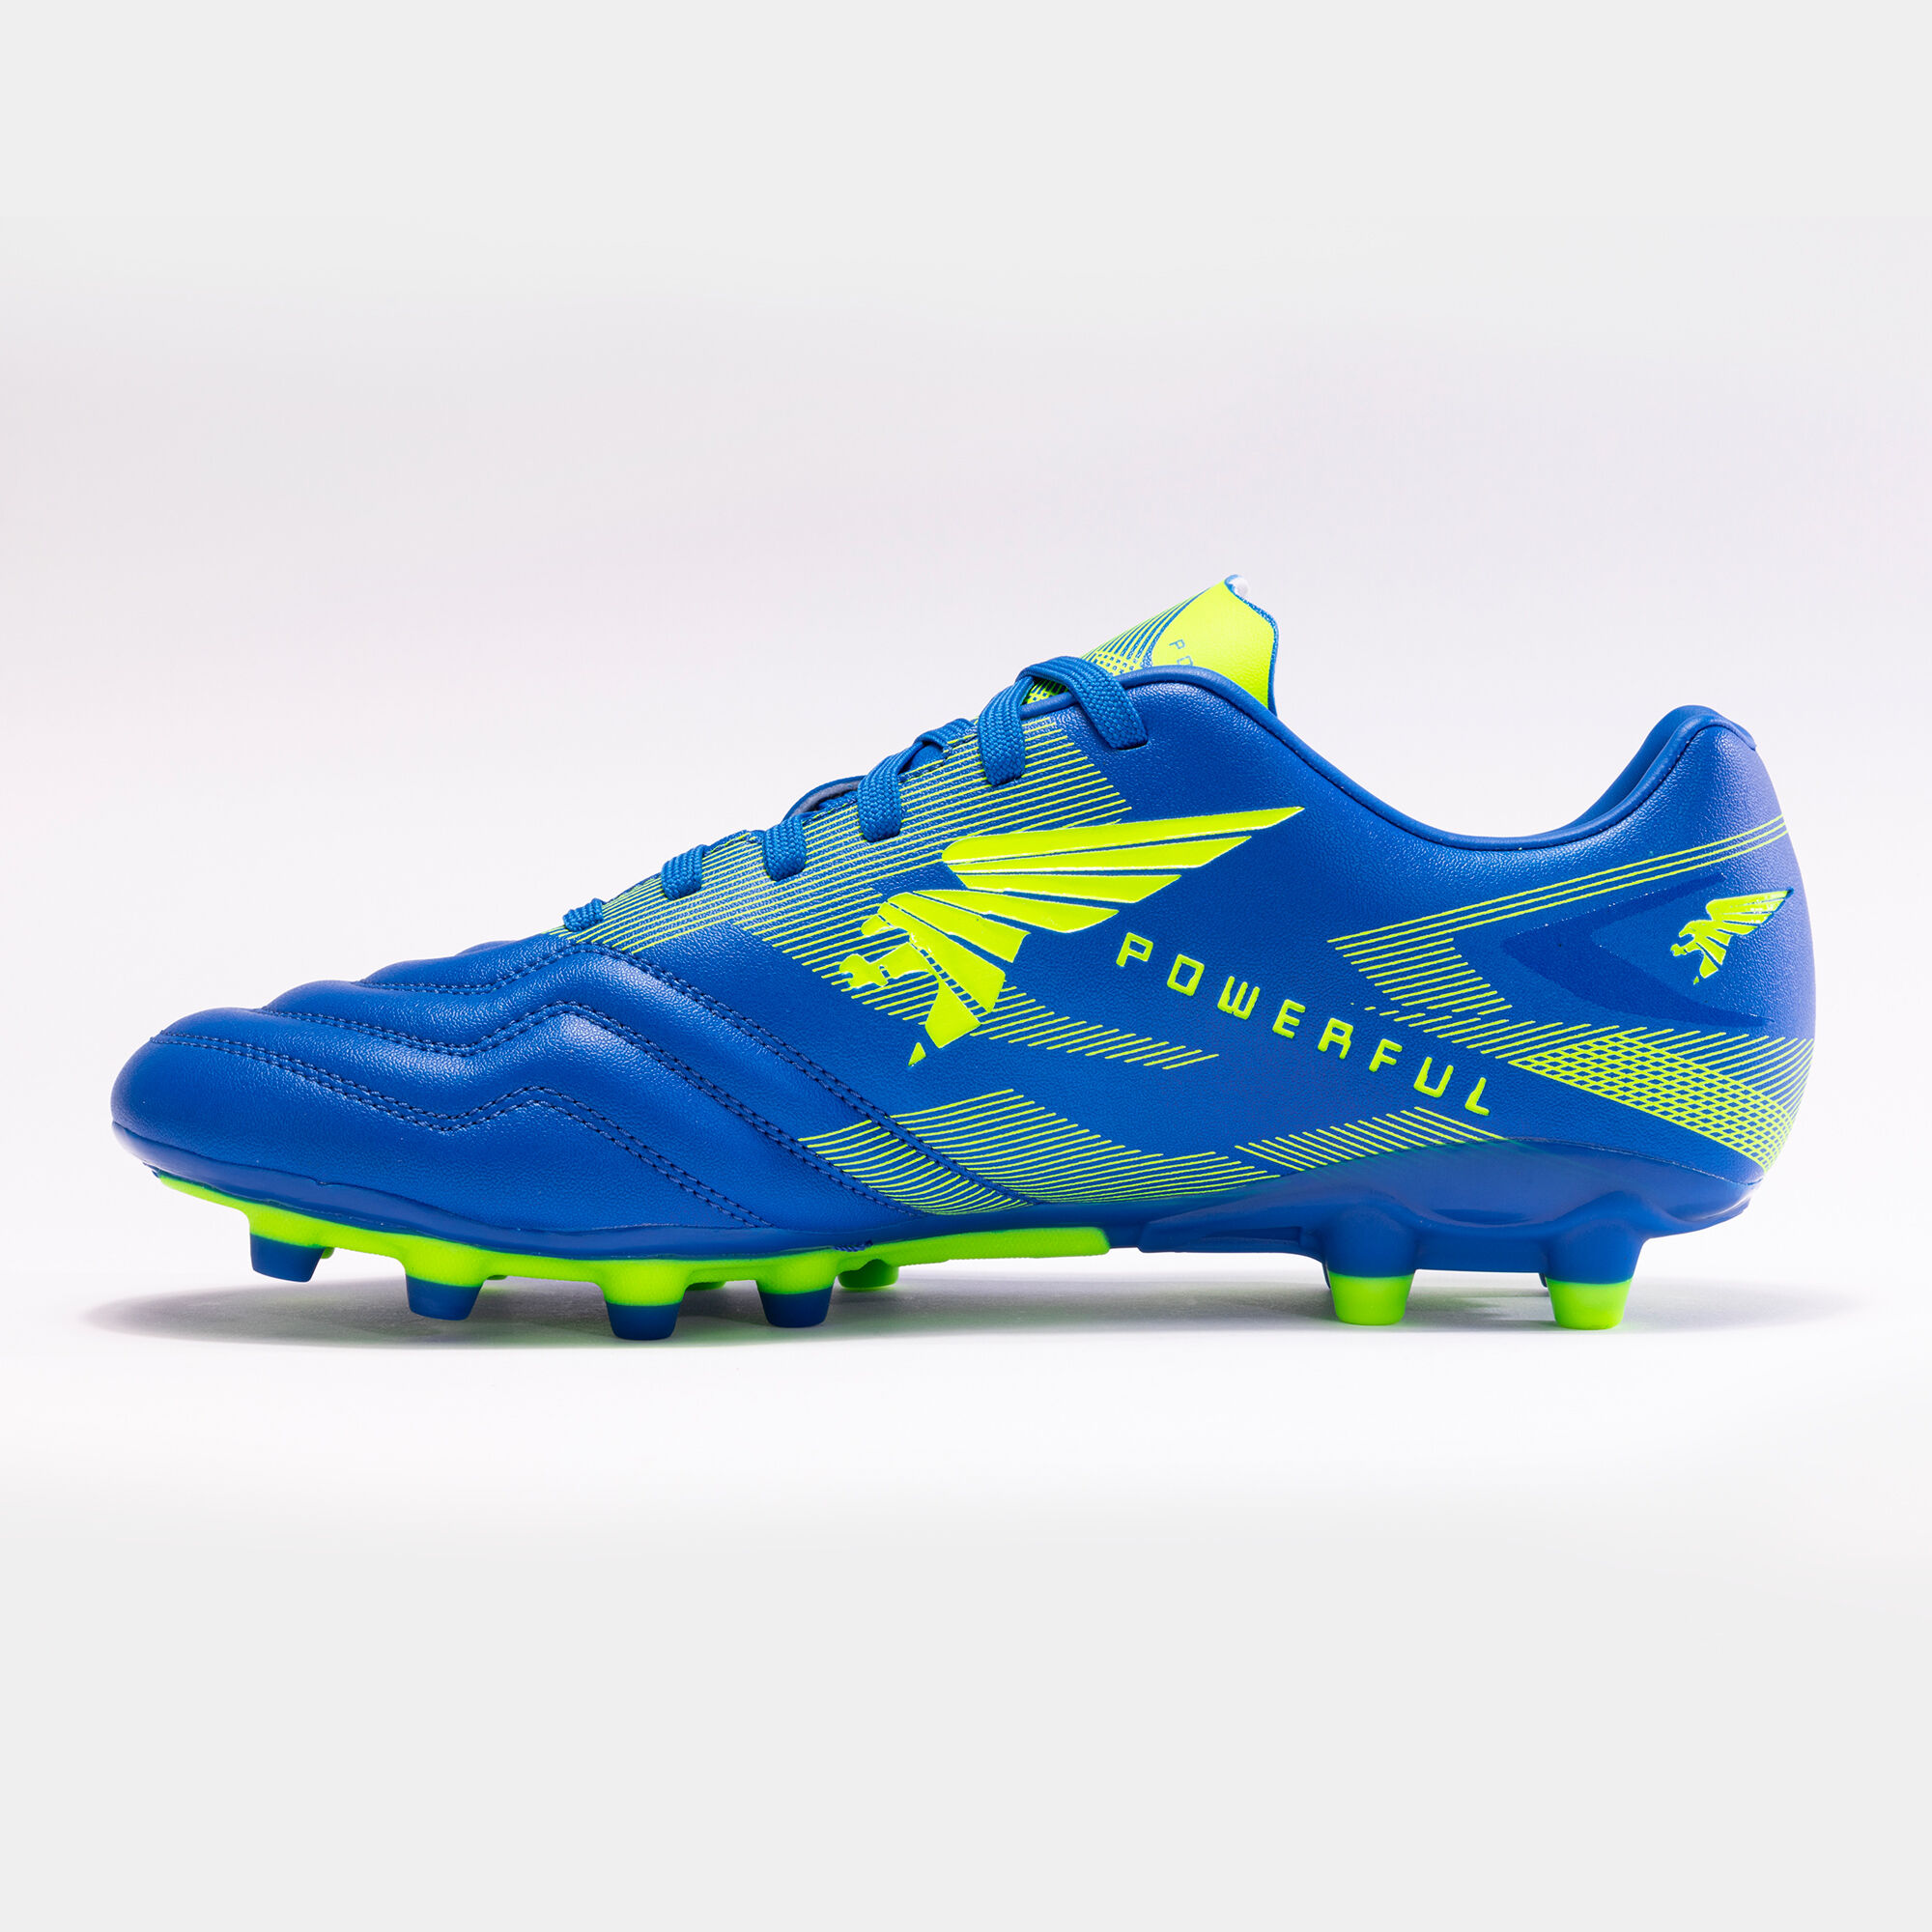 Football boots Powerful 24 artificial grass royal blue